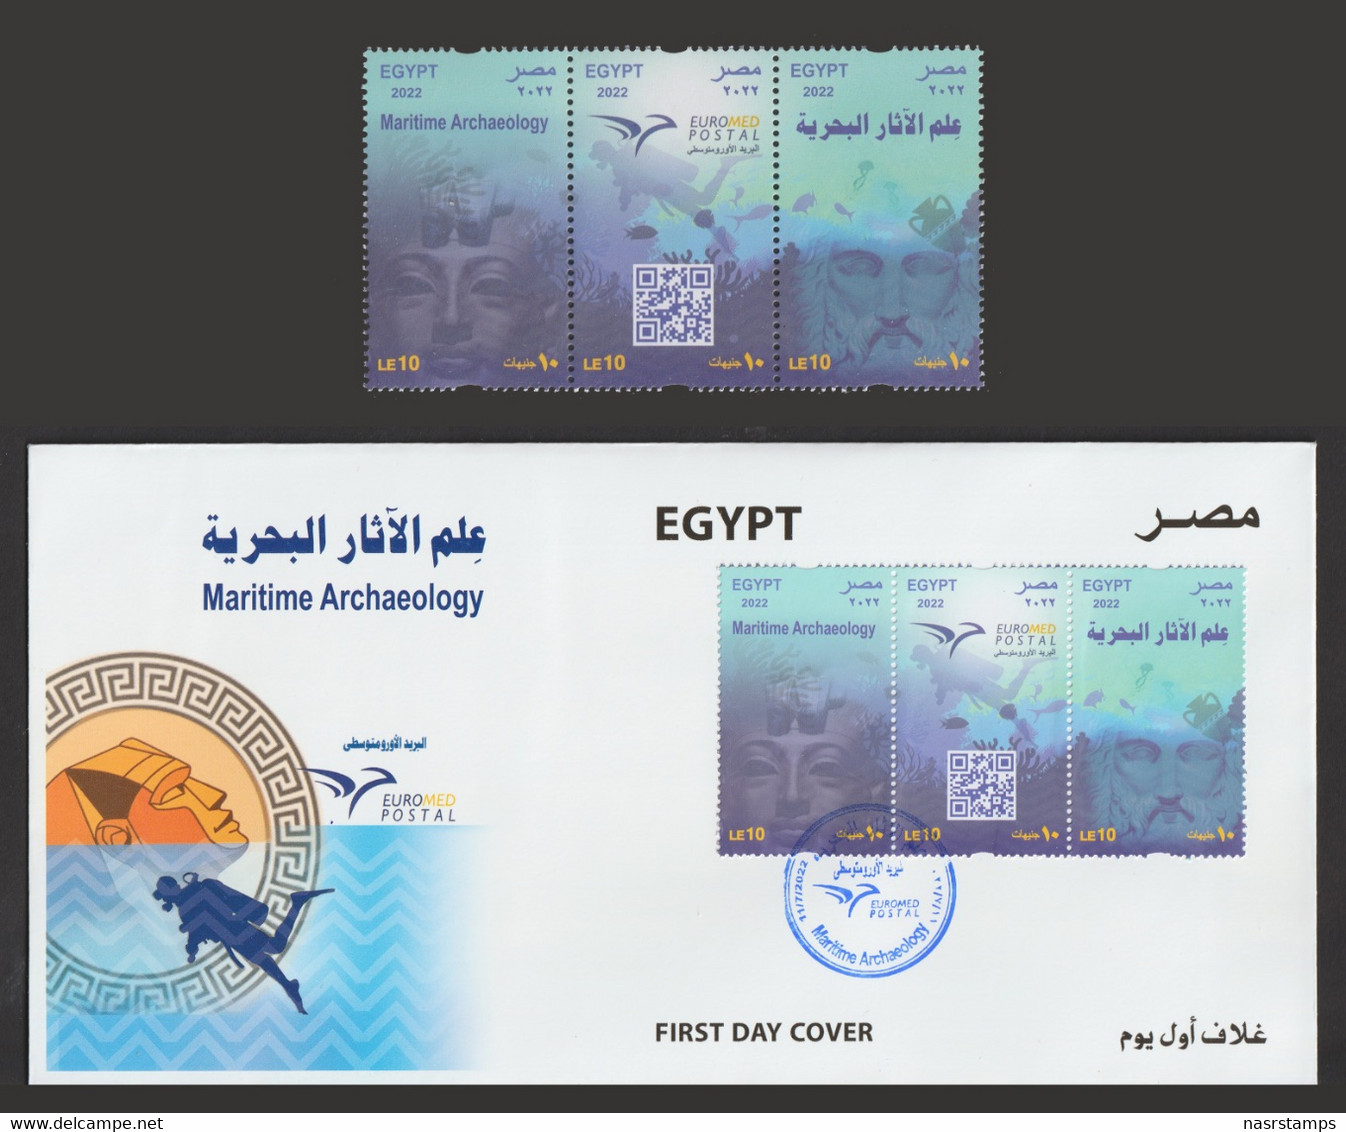 Egypt - 2022 - FDC - ( EUROMED Postal - Maritime Archaeology ) - MNH** - Egyptologie